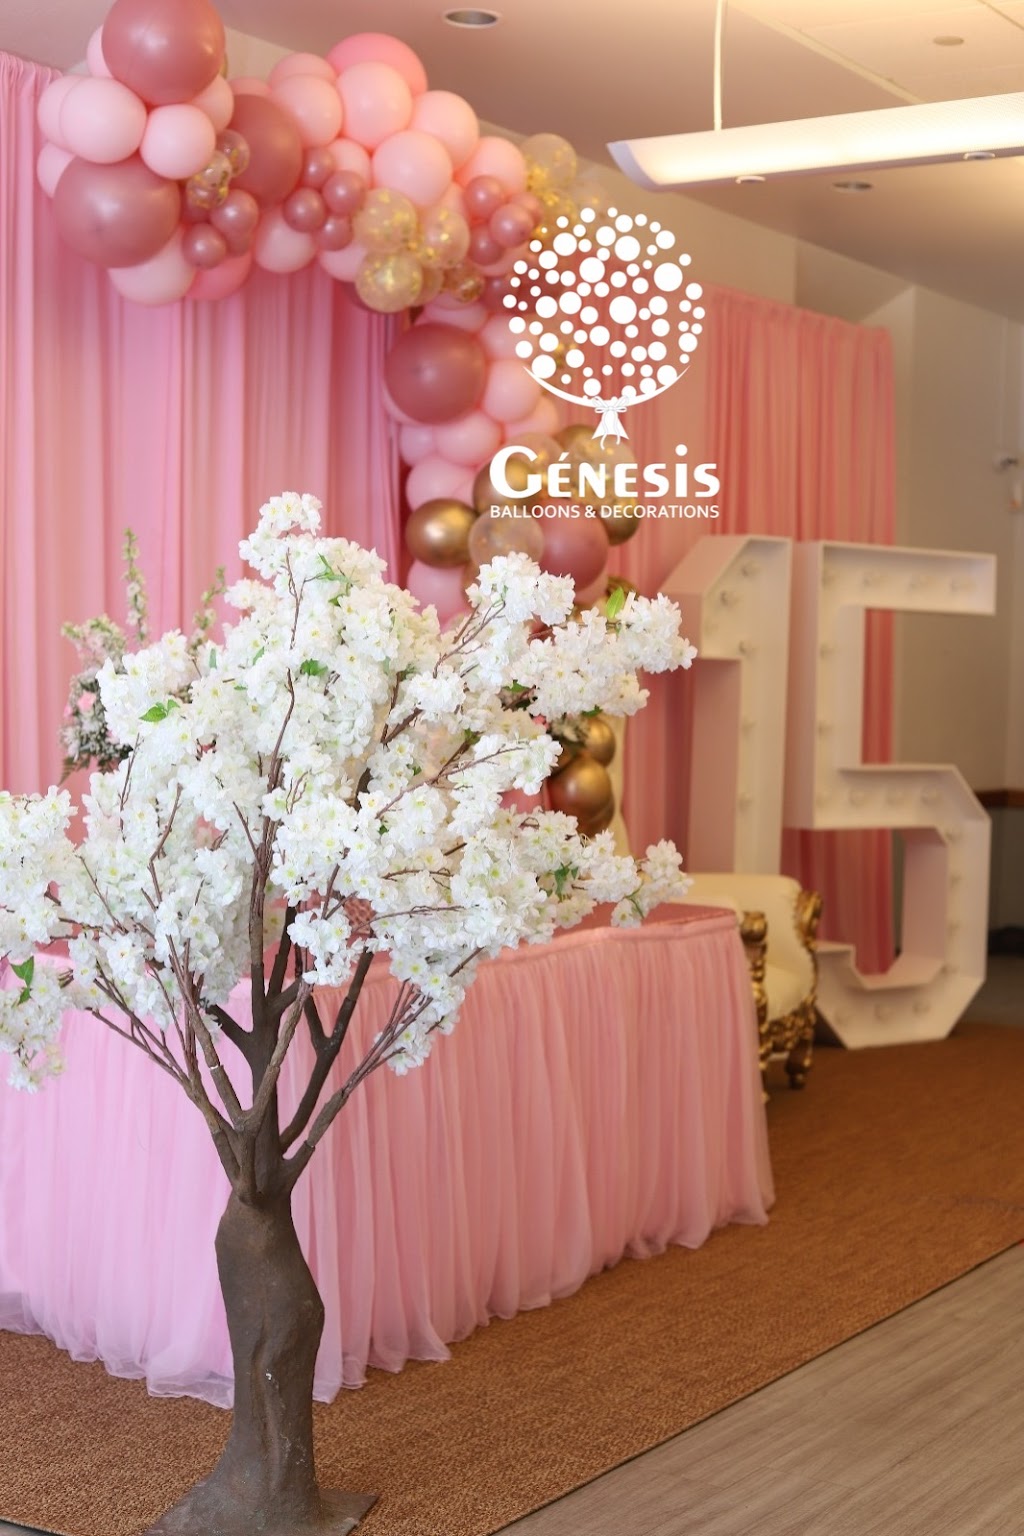 Genesis Balloons & Decorations | 7 Charles St, White Plains, NY 10606 | Phone: (914) 356-6377